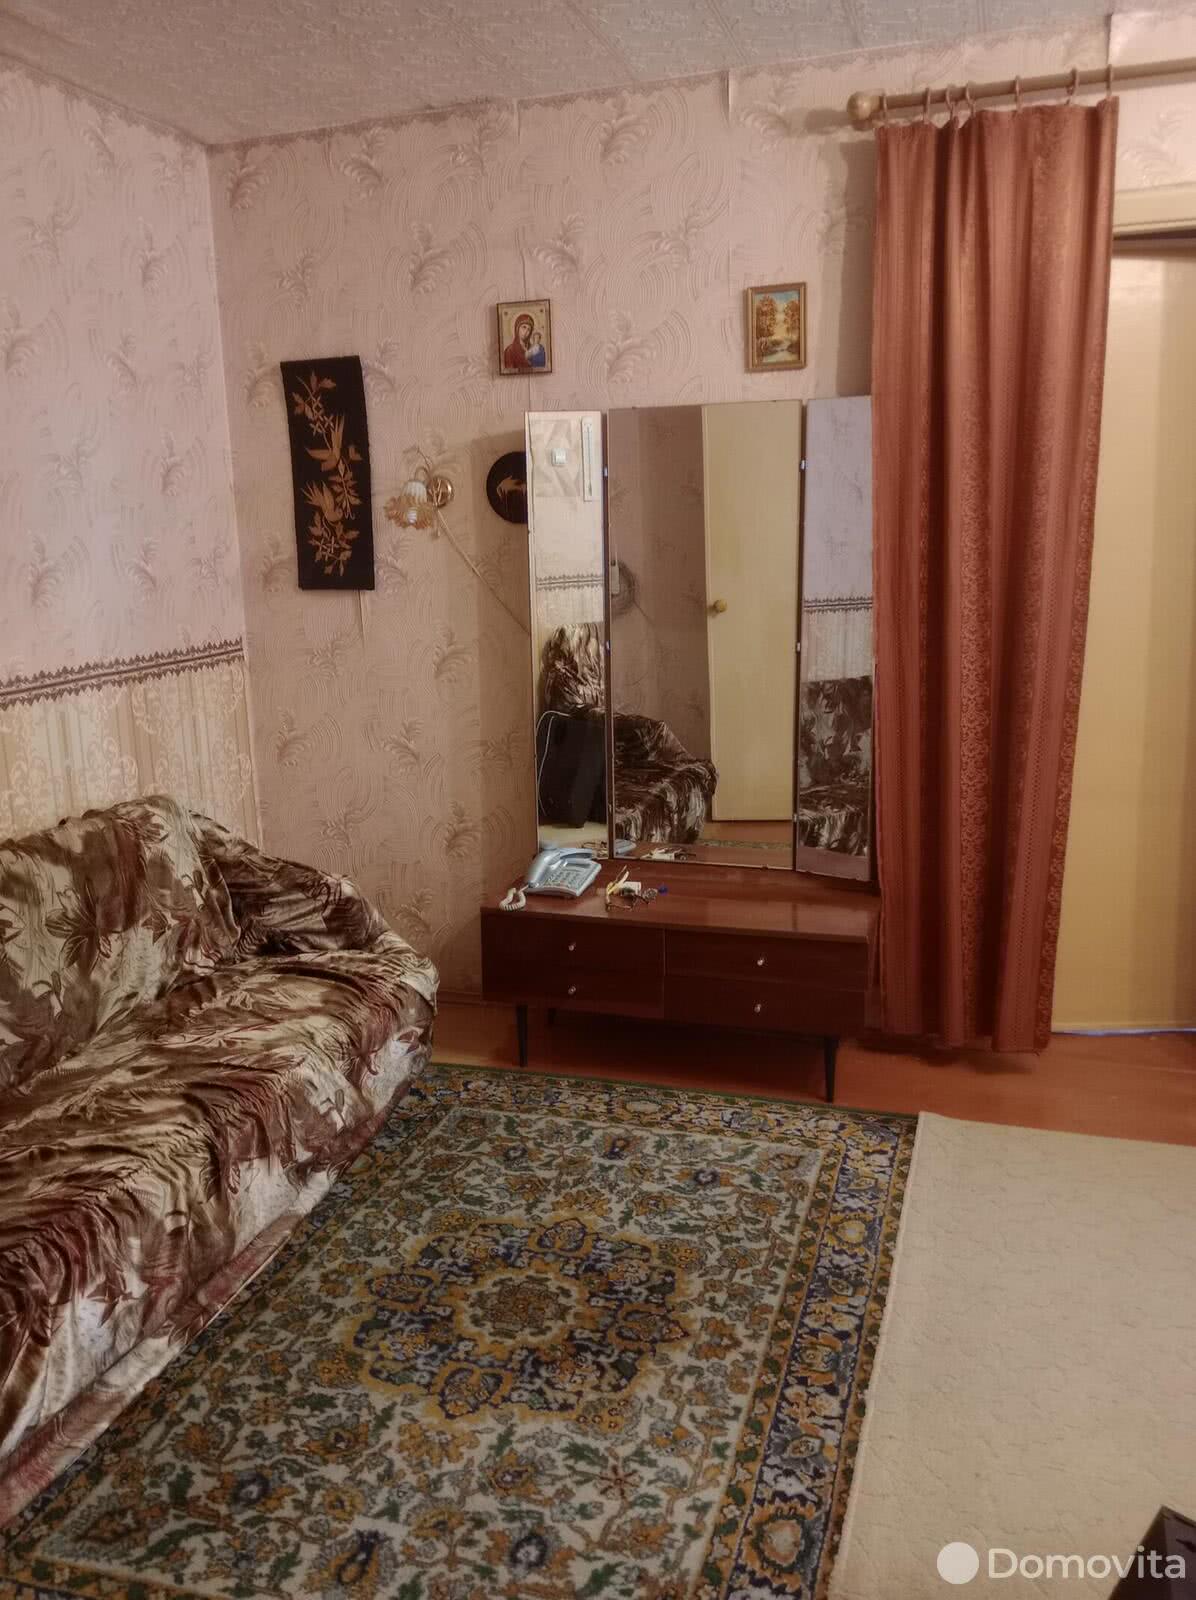 комната, Витебск, пр-т Фрунзе, д. 14, стоимость аренды 246 р./мес.